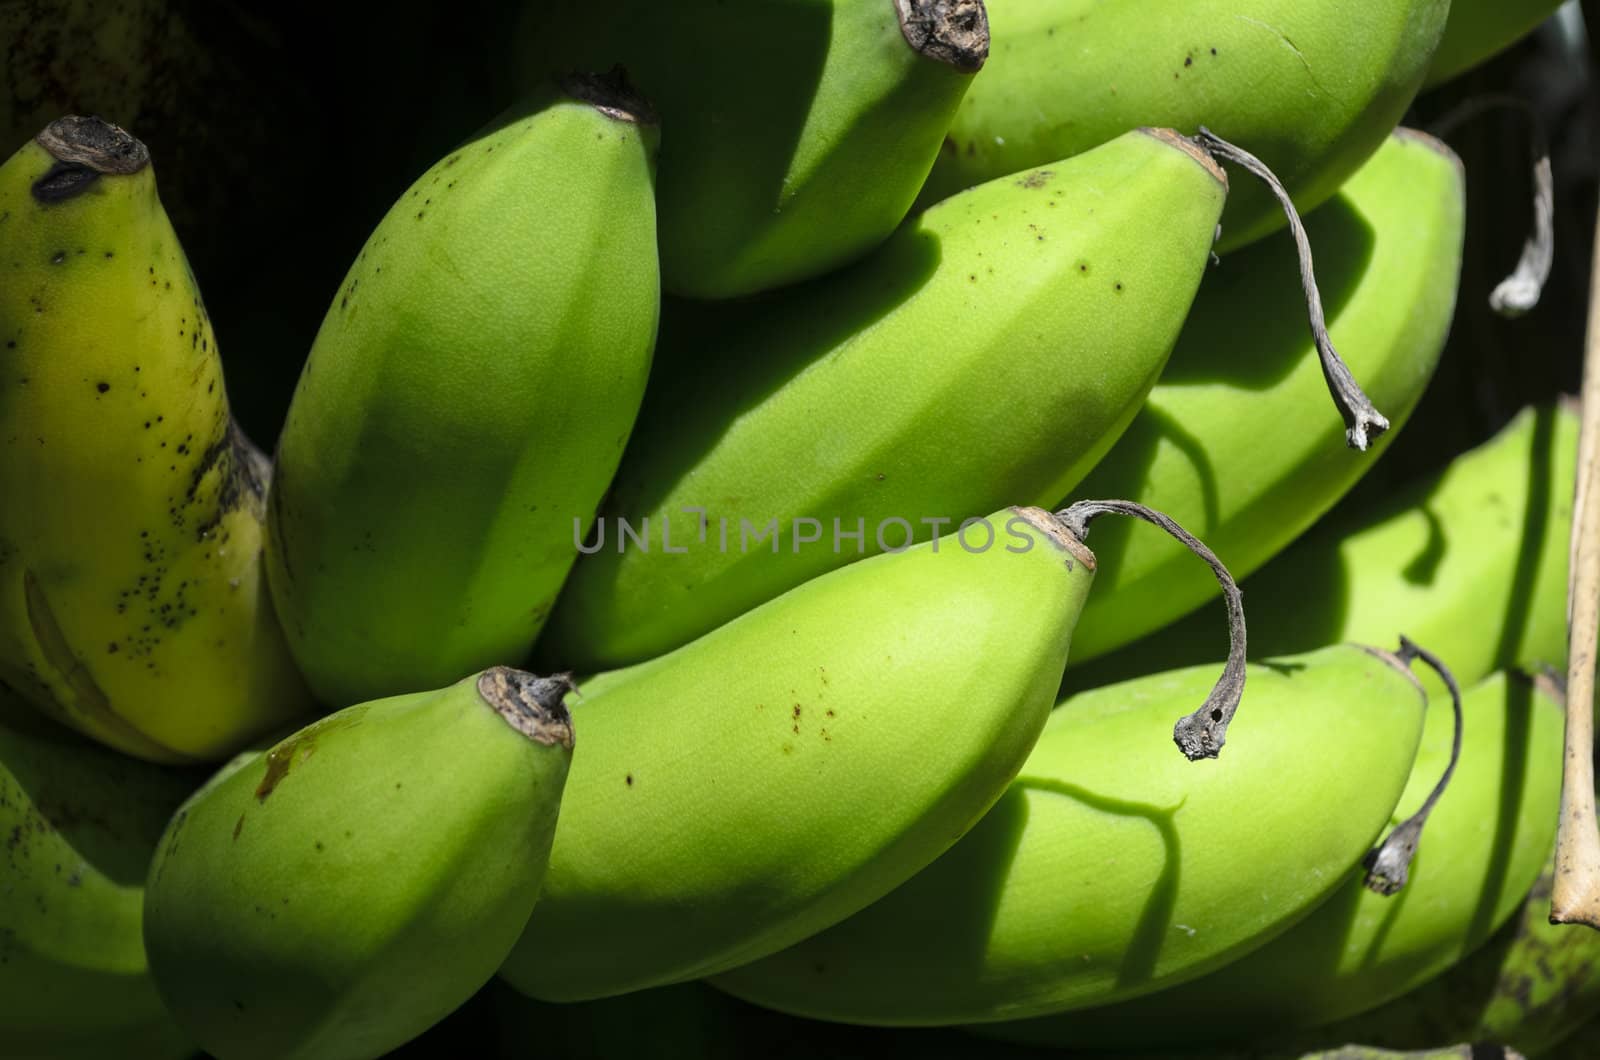 Close-up of unripened banana fruits on tree